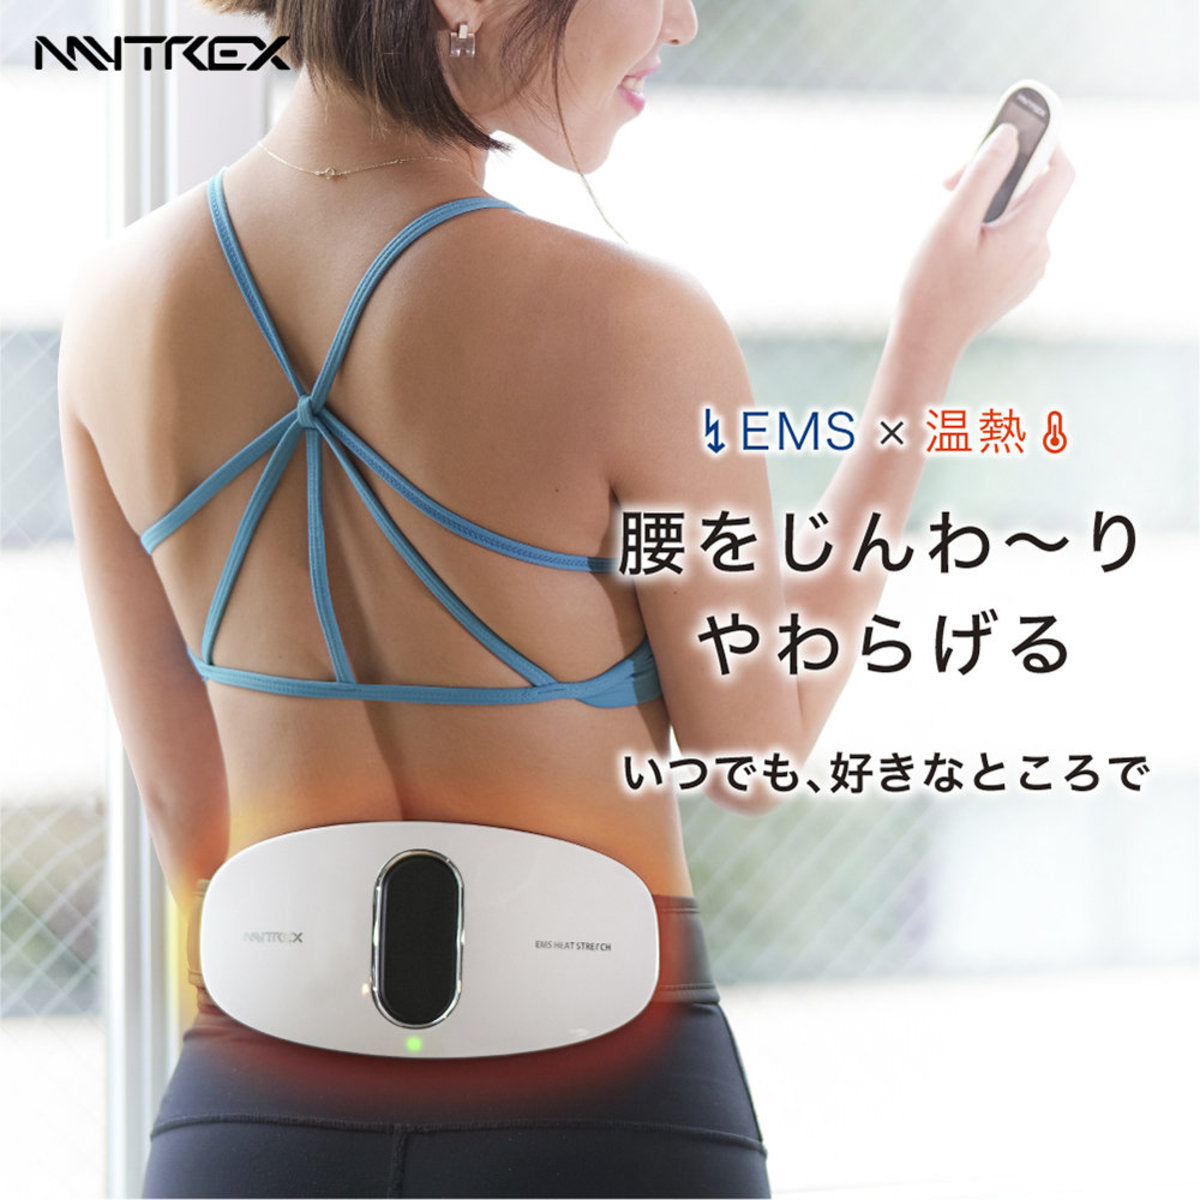 MYTREX - Waist EMS heating massager [Licensed in Hong Kong]